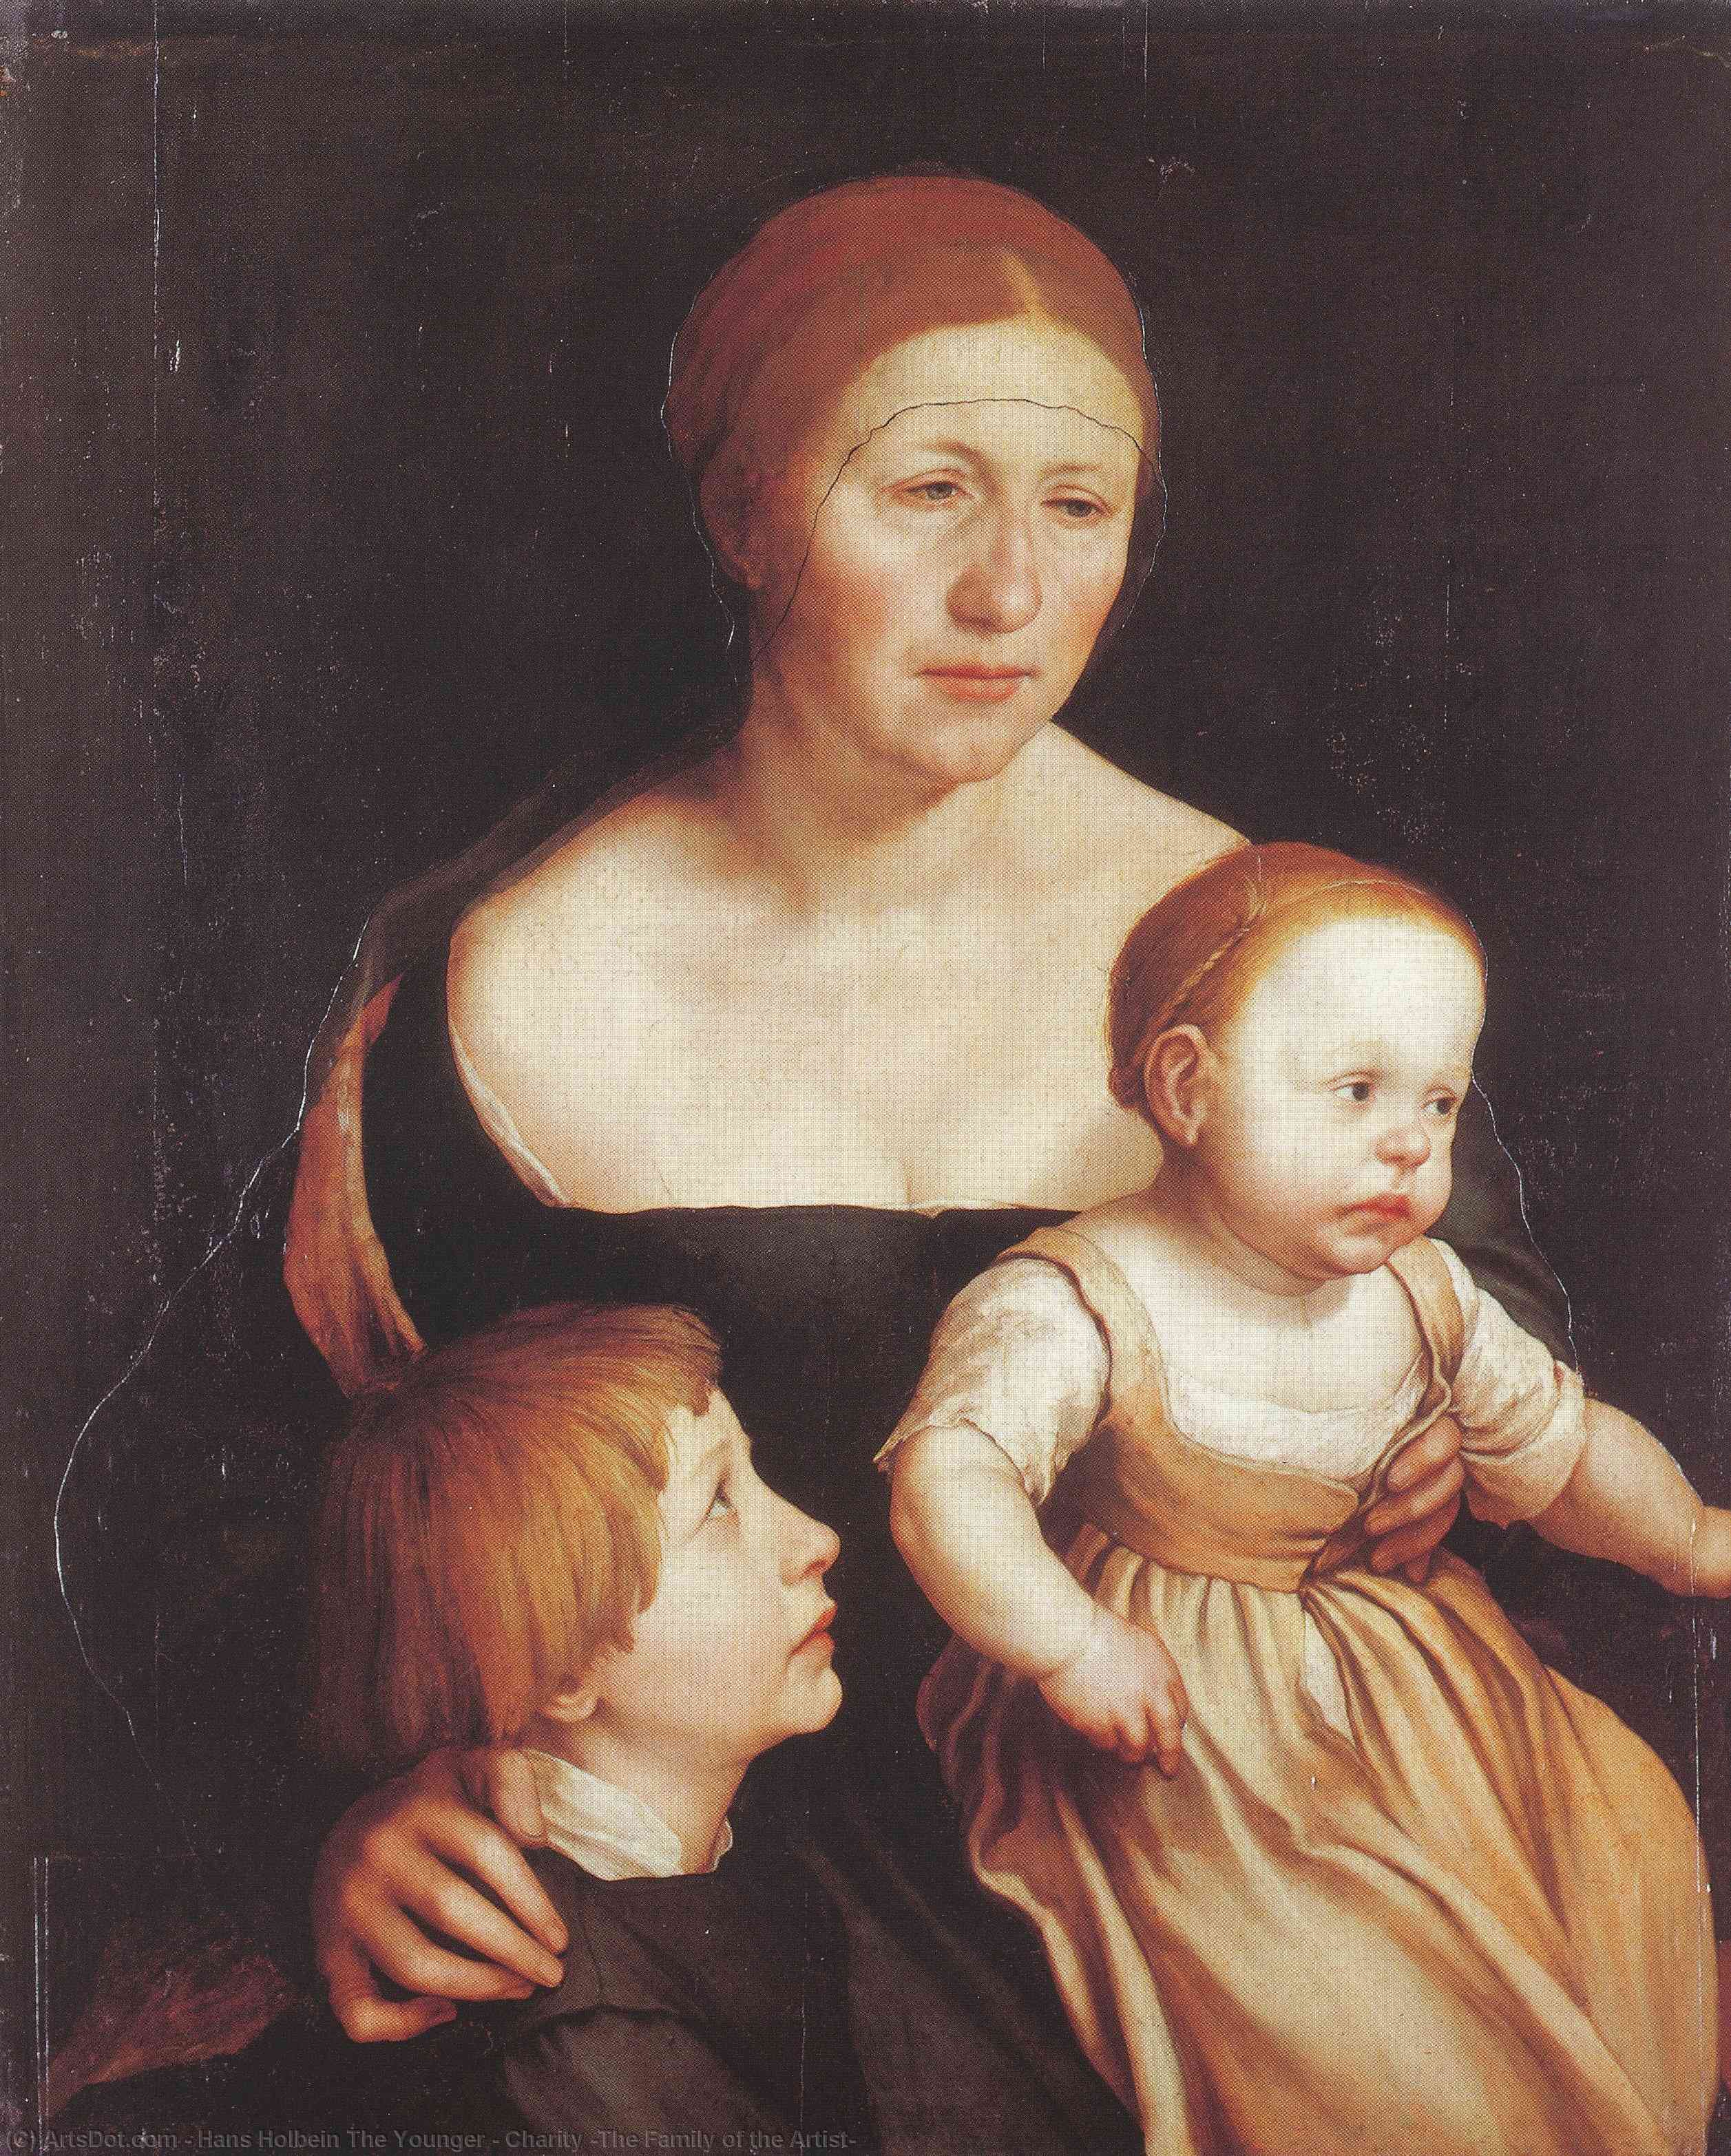 WikiOO.org - دایره المعارف هنرهای زیبا - نقاشی، آثار هنری Hans Holbein The Younger - Charity (The Family of the Artist)